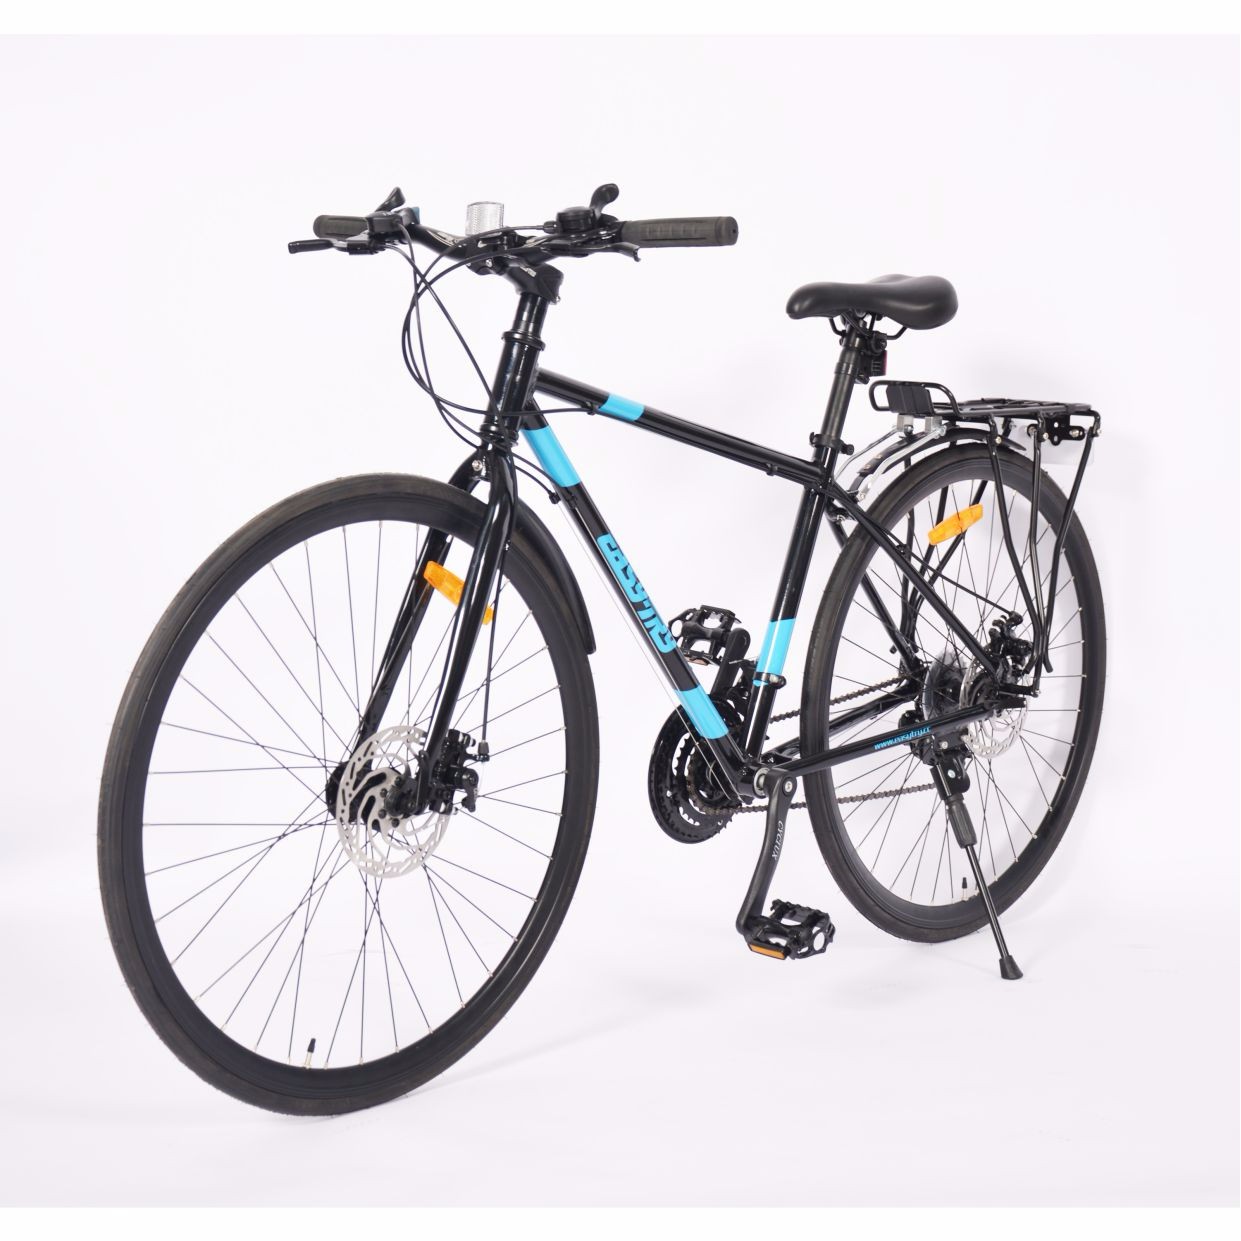 Aluminum Alloy Travel Bikes Urban Bicycle For Adult Manufacturers, Aluminum Alloy Travel Bikes Urban Bicycle For Adult Factory, Supply Aluminum Alloy Travel Bikes Urban Bicycle For Adult